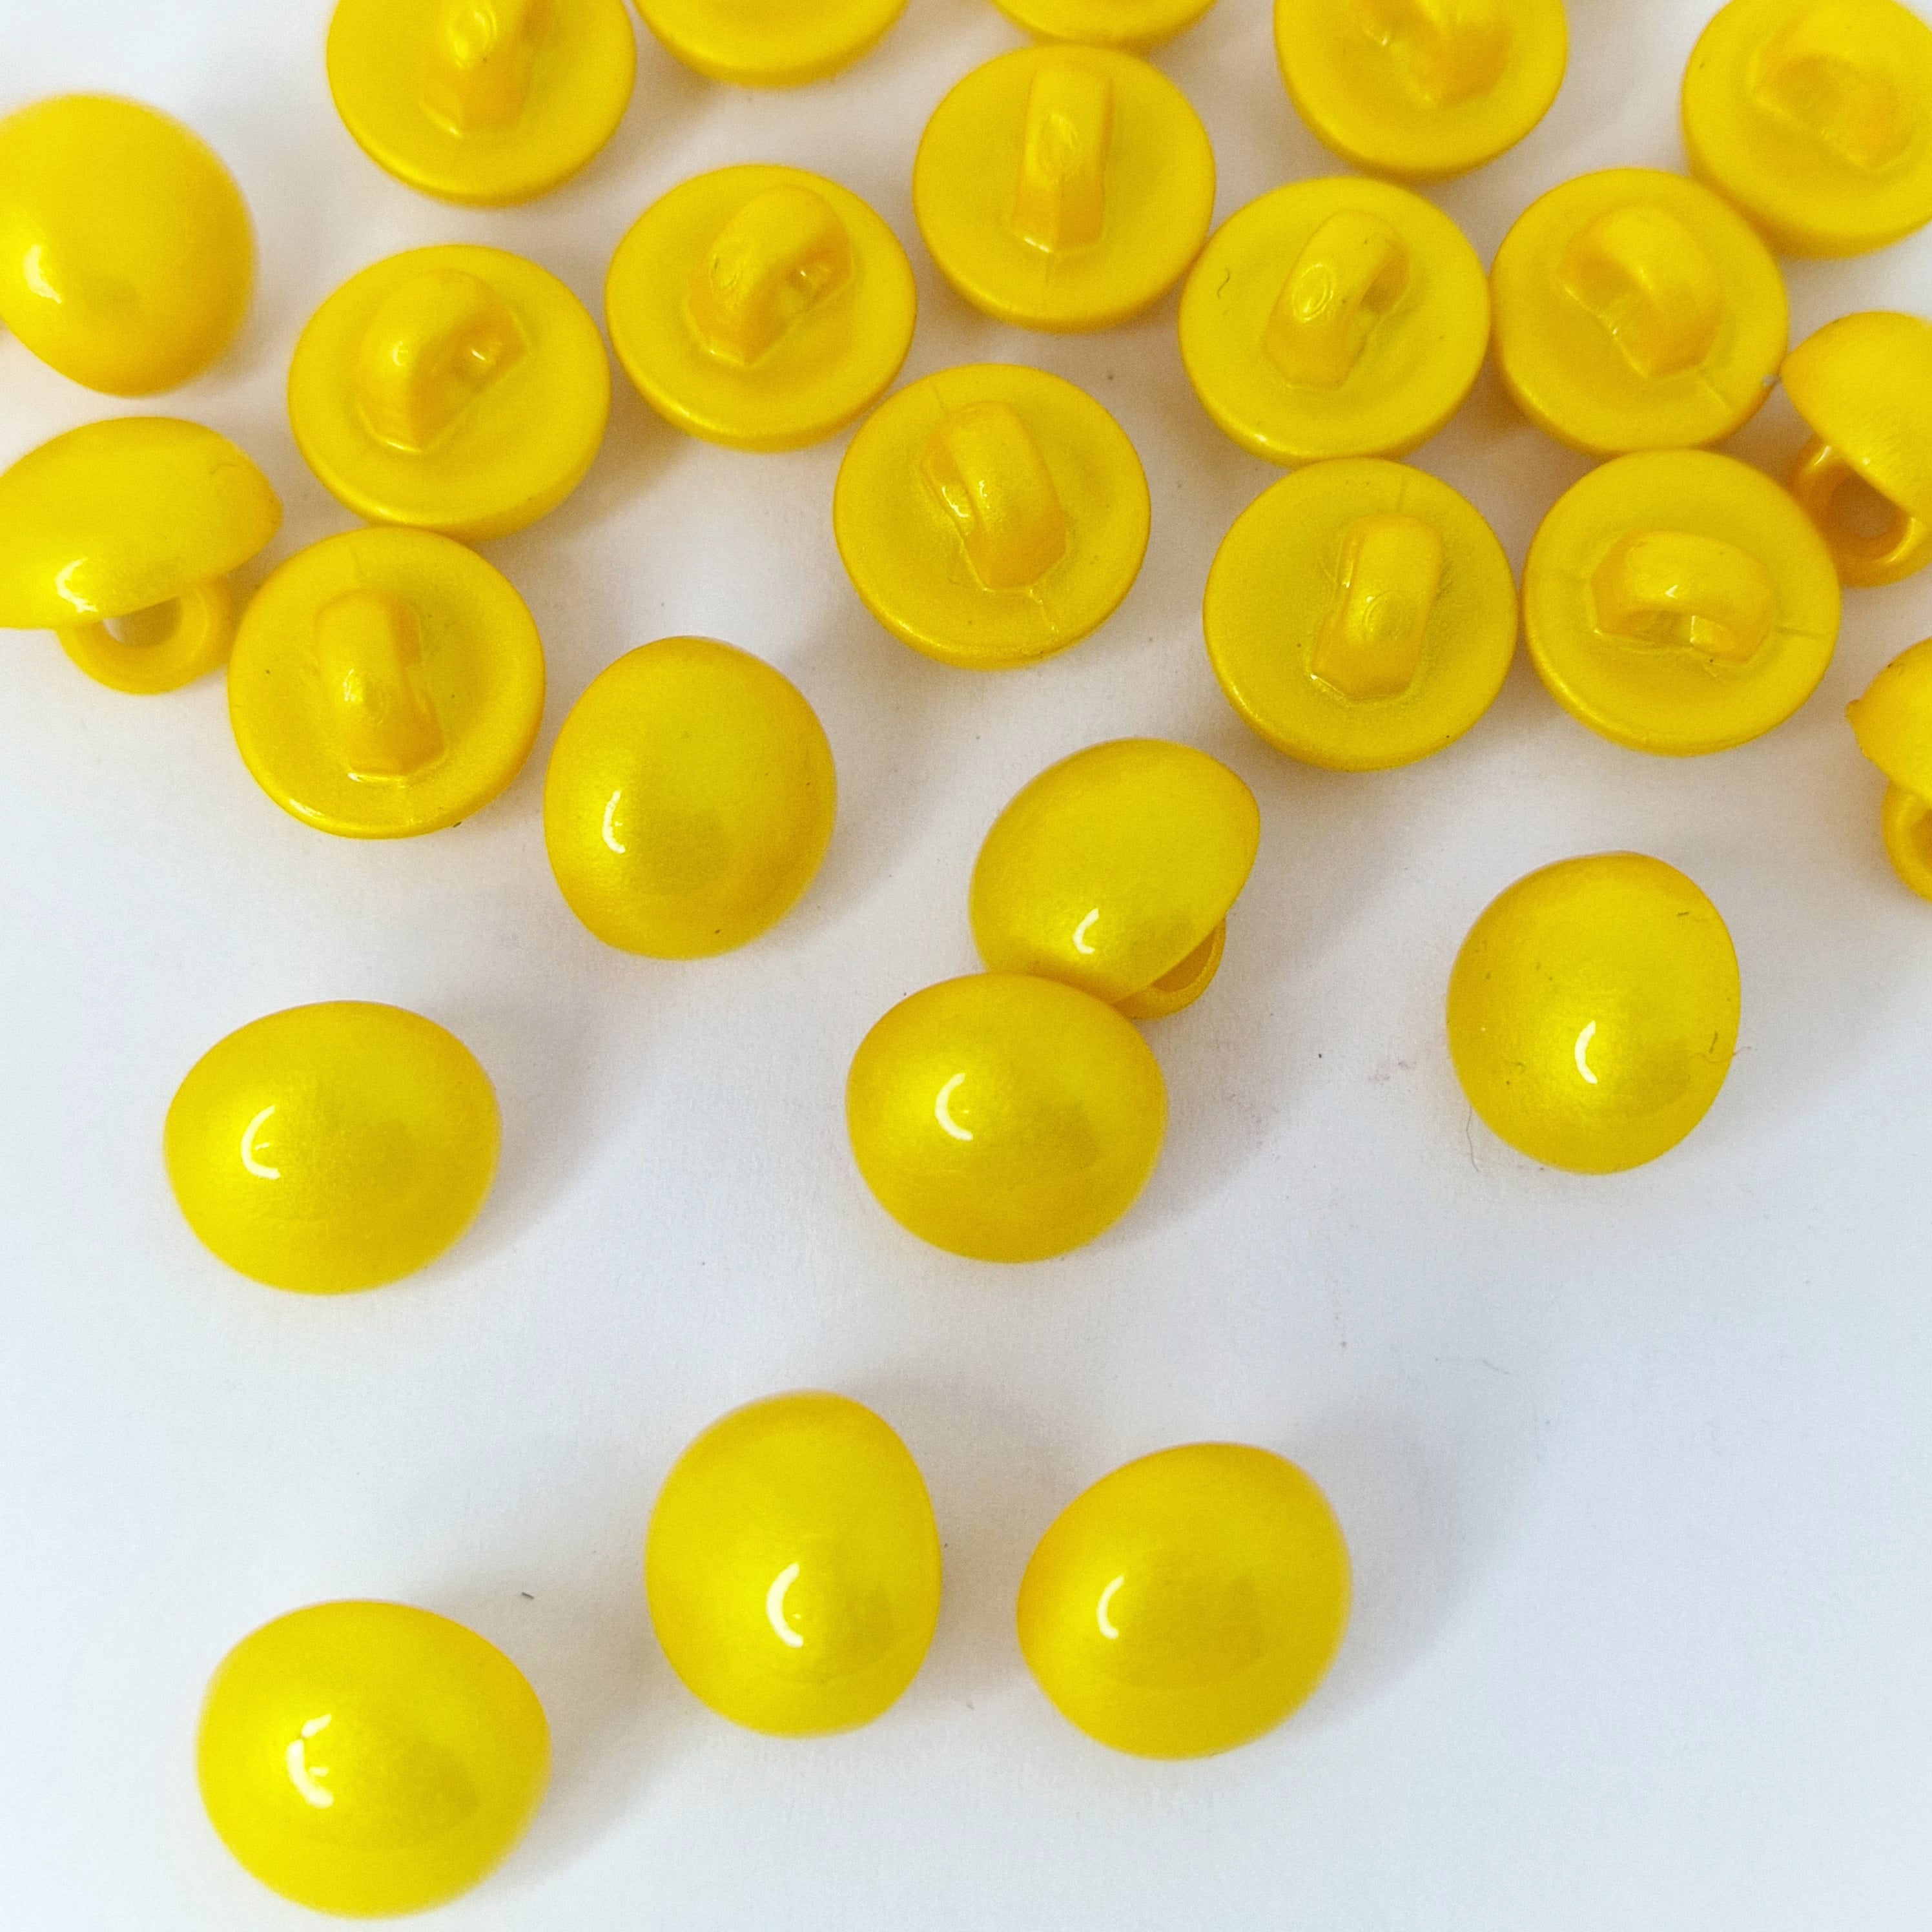 MajorCrafts 24pcs 11mm Yellow High-Grade Acrylic Small Round Sewing Mushroom Shank Buttons